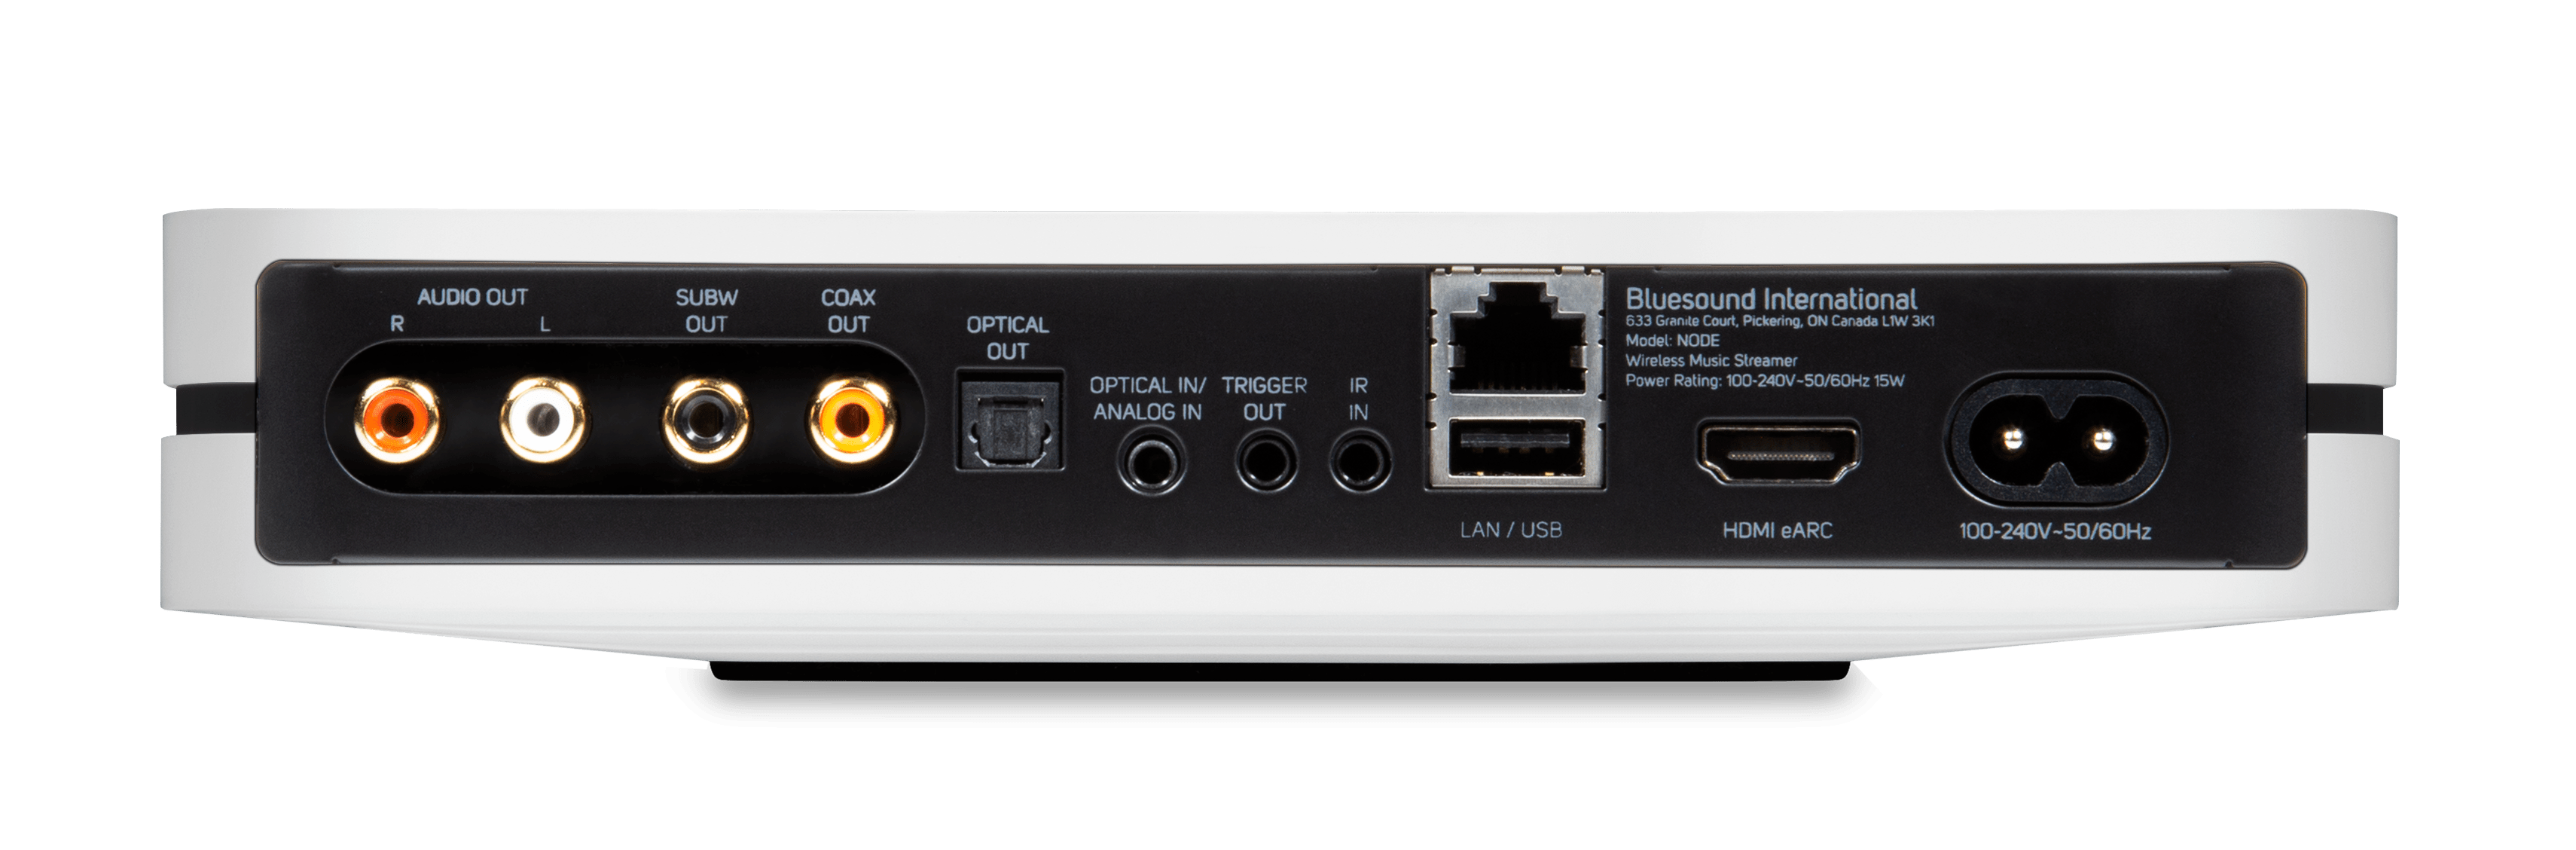 Bluesound NODE N130 HiRes streamer w/HDMI rear connections - Douglas HiFi Perth